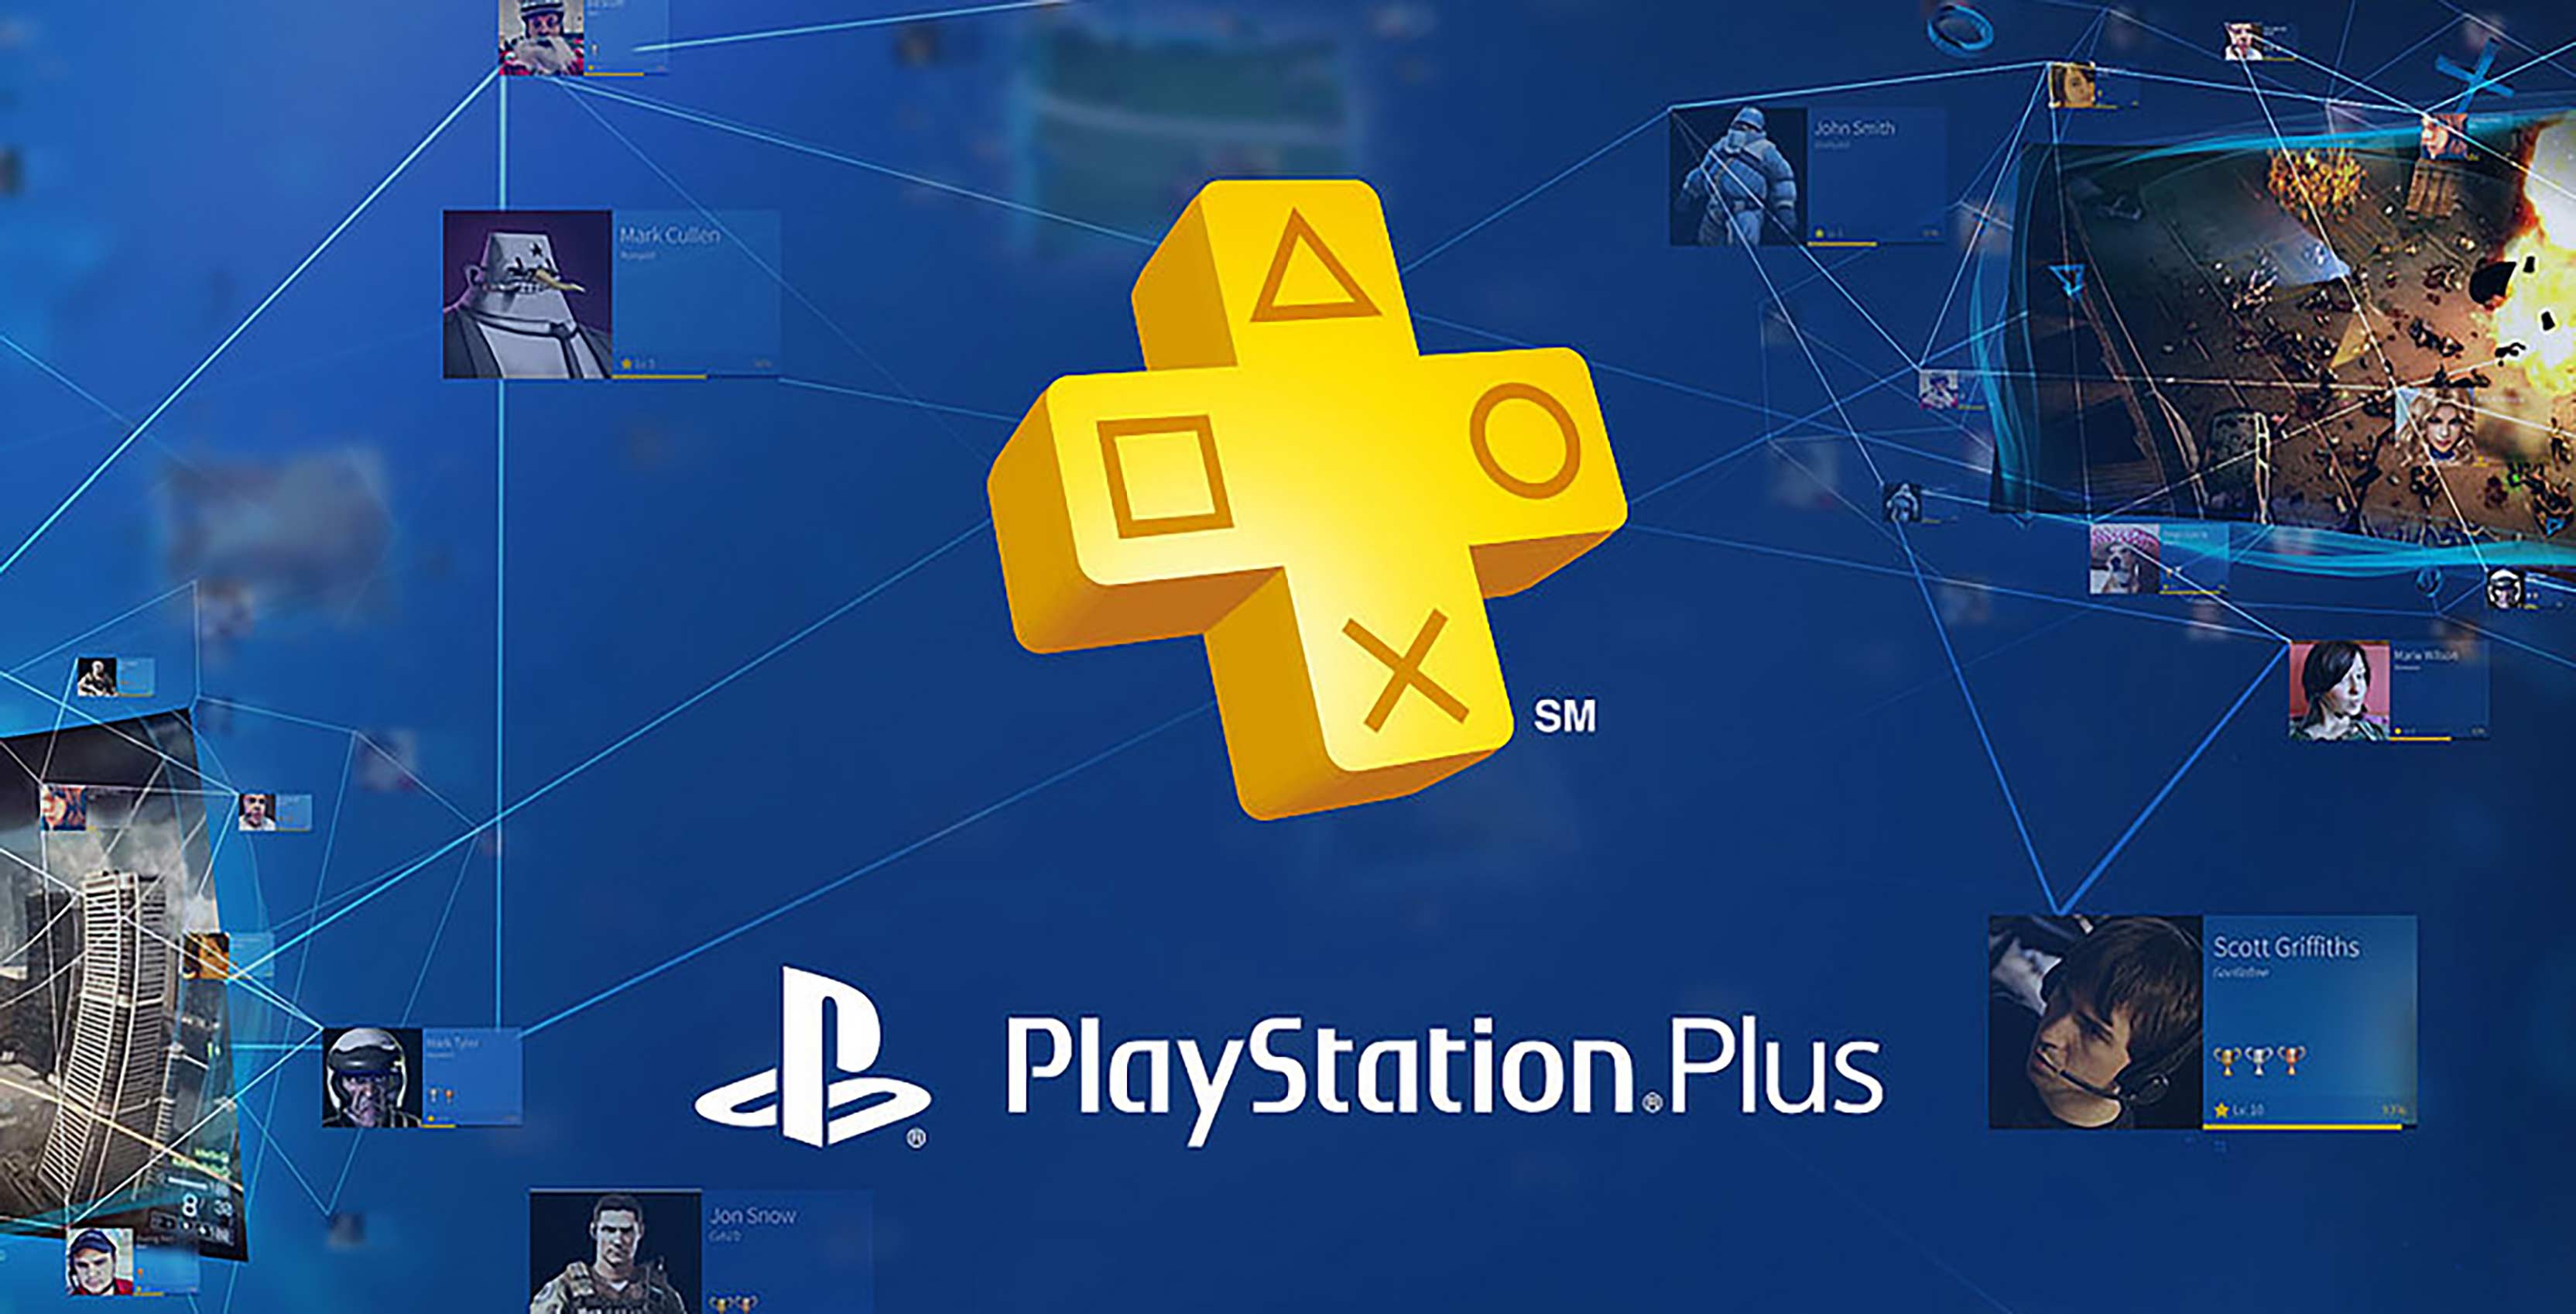 PlayStation Plus membership